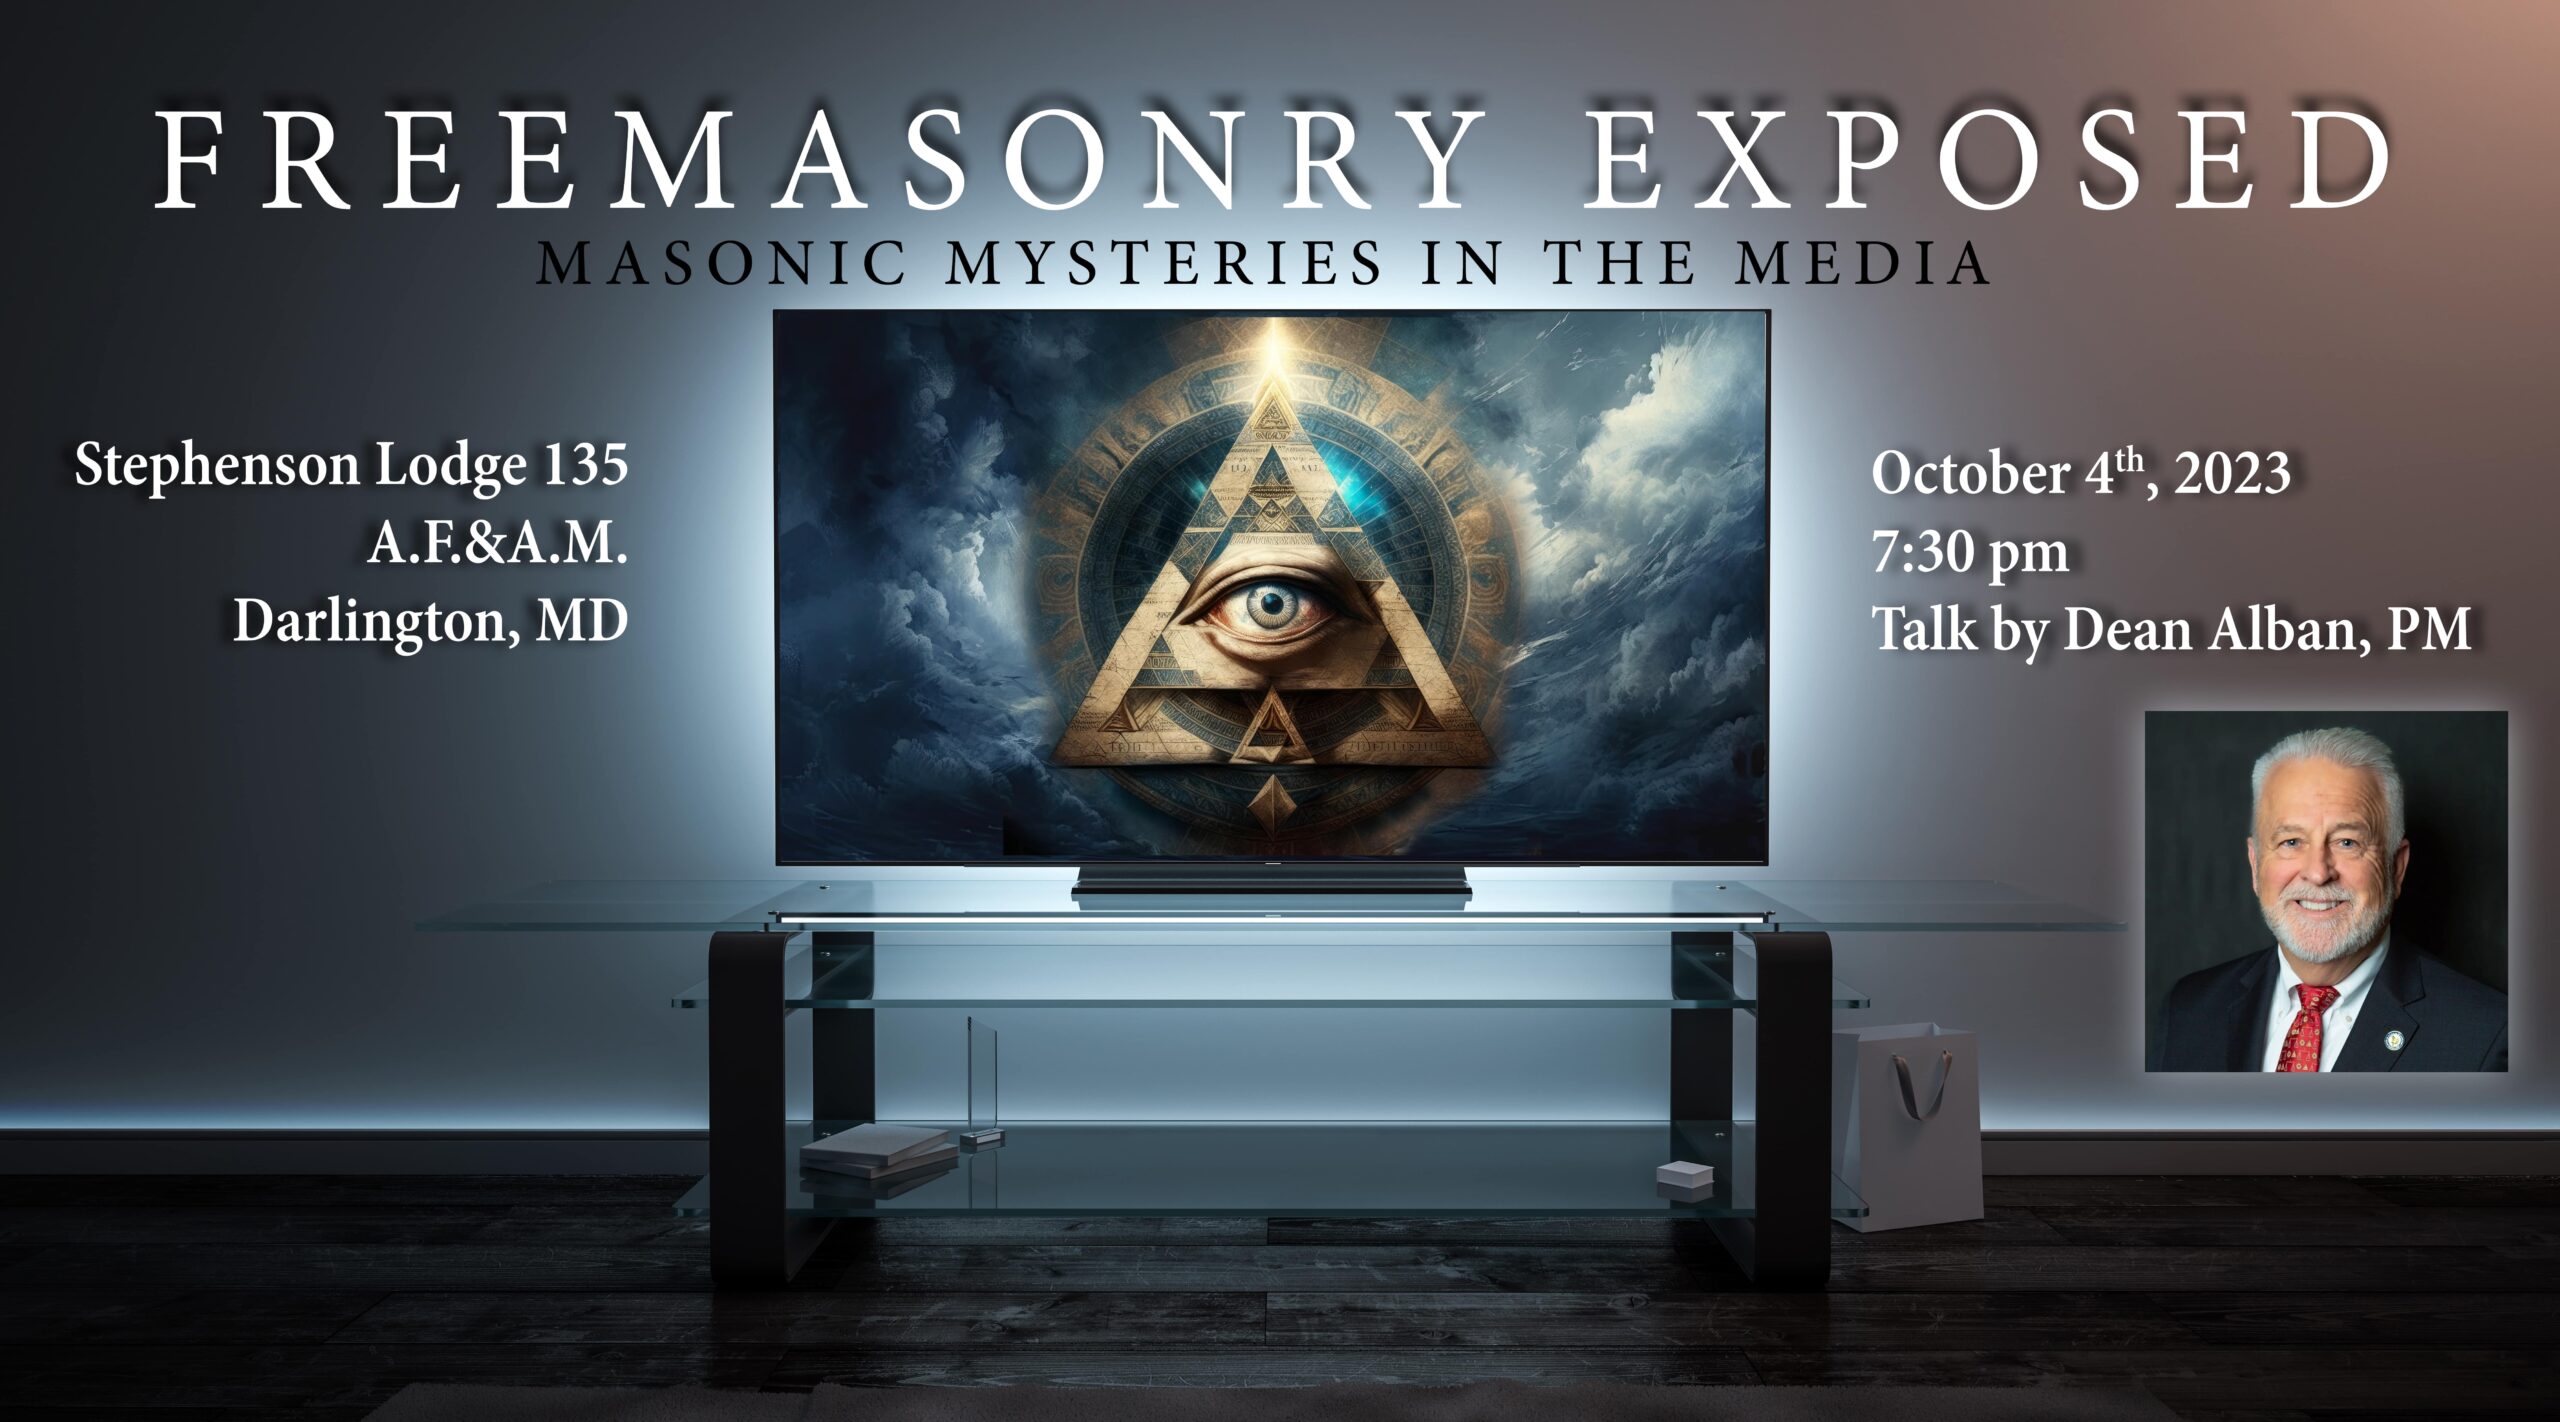 Freemasonry Exposed! Talk by Dean Alban, PM